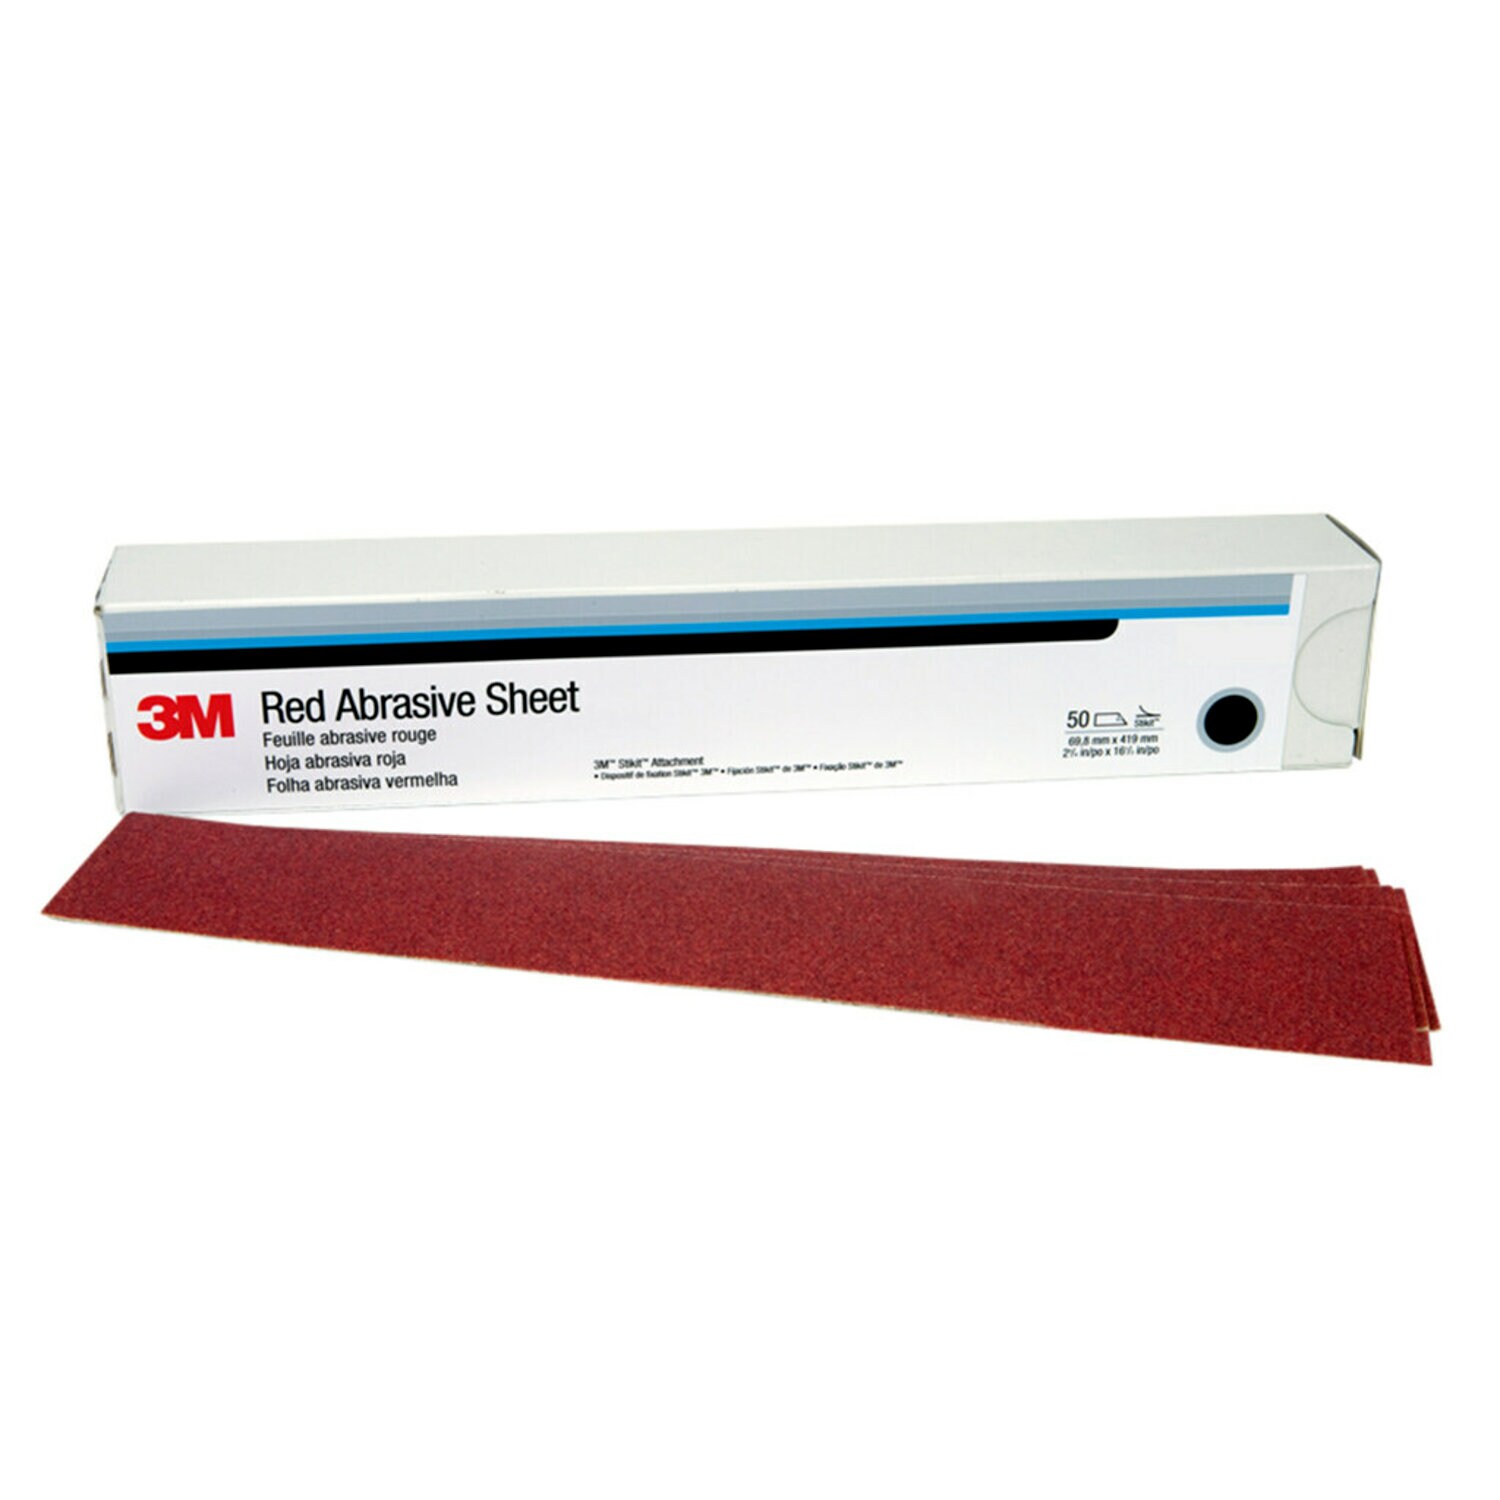 7000119796 - 3M Hookit Red Abrasive Sheet, 01181, P80, 2-3/4 in x 16 1/2 in, 25
sheets per carton, 5 cartons per case